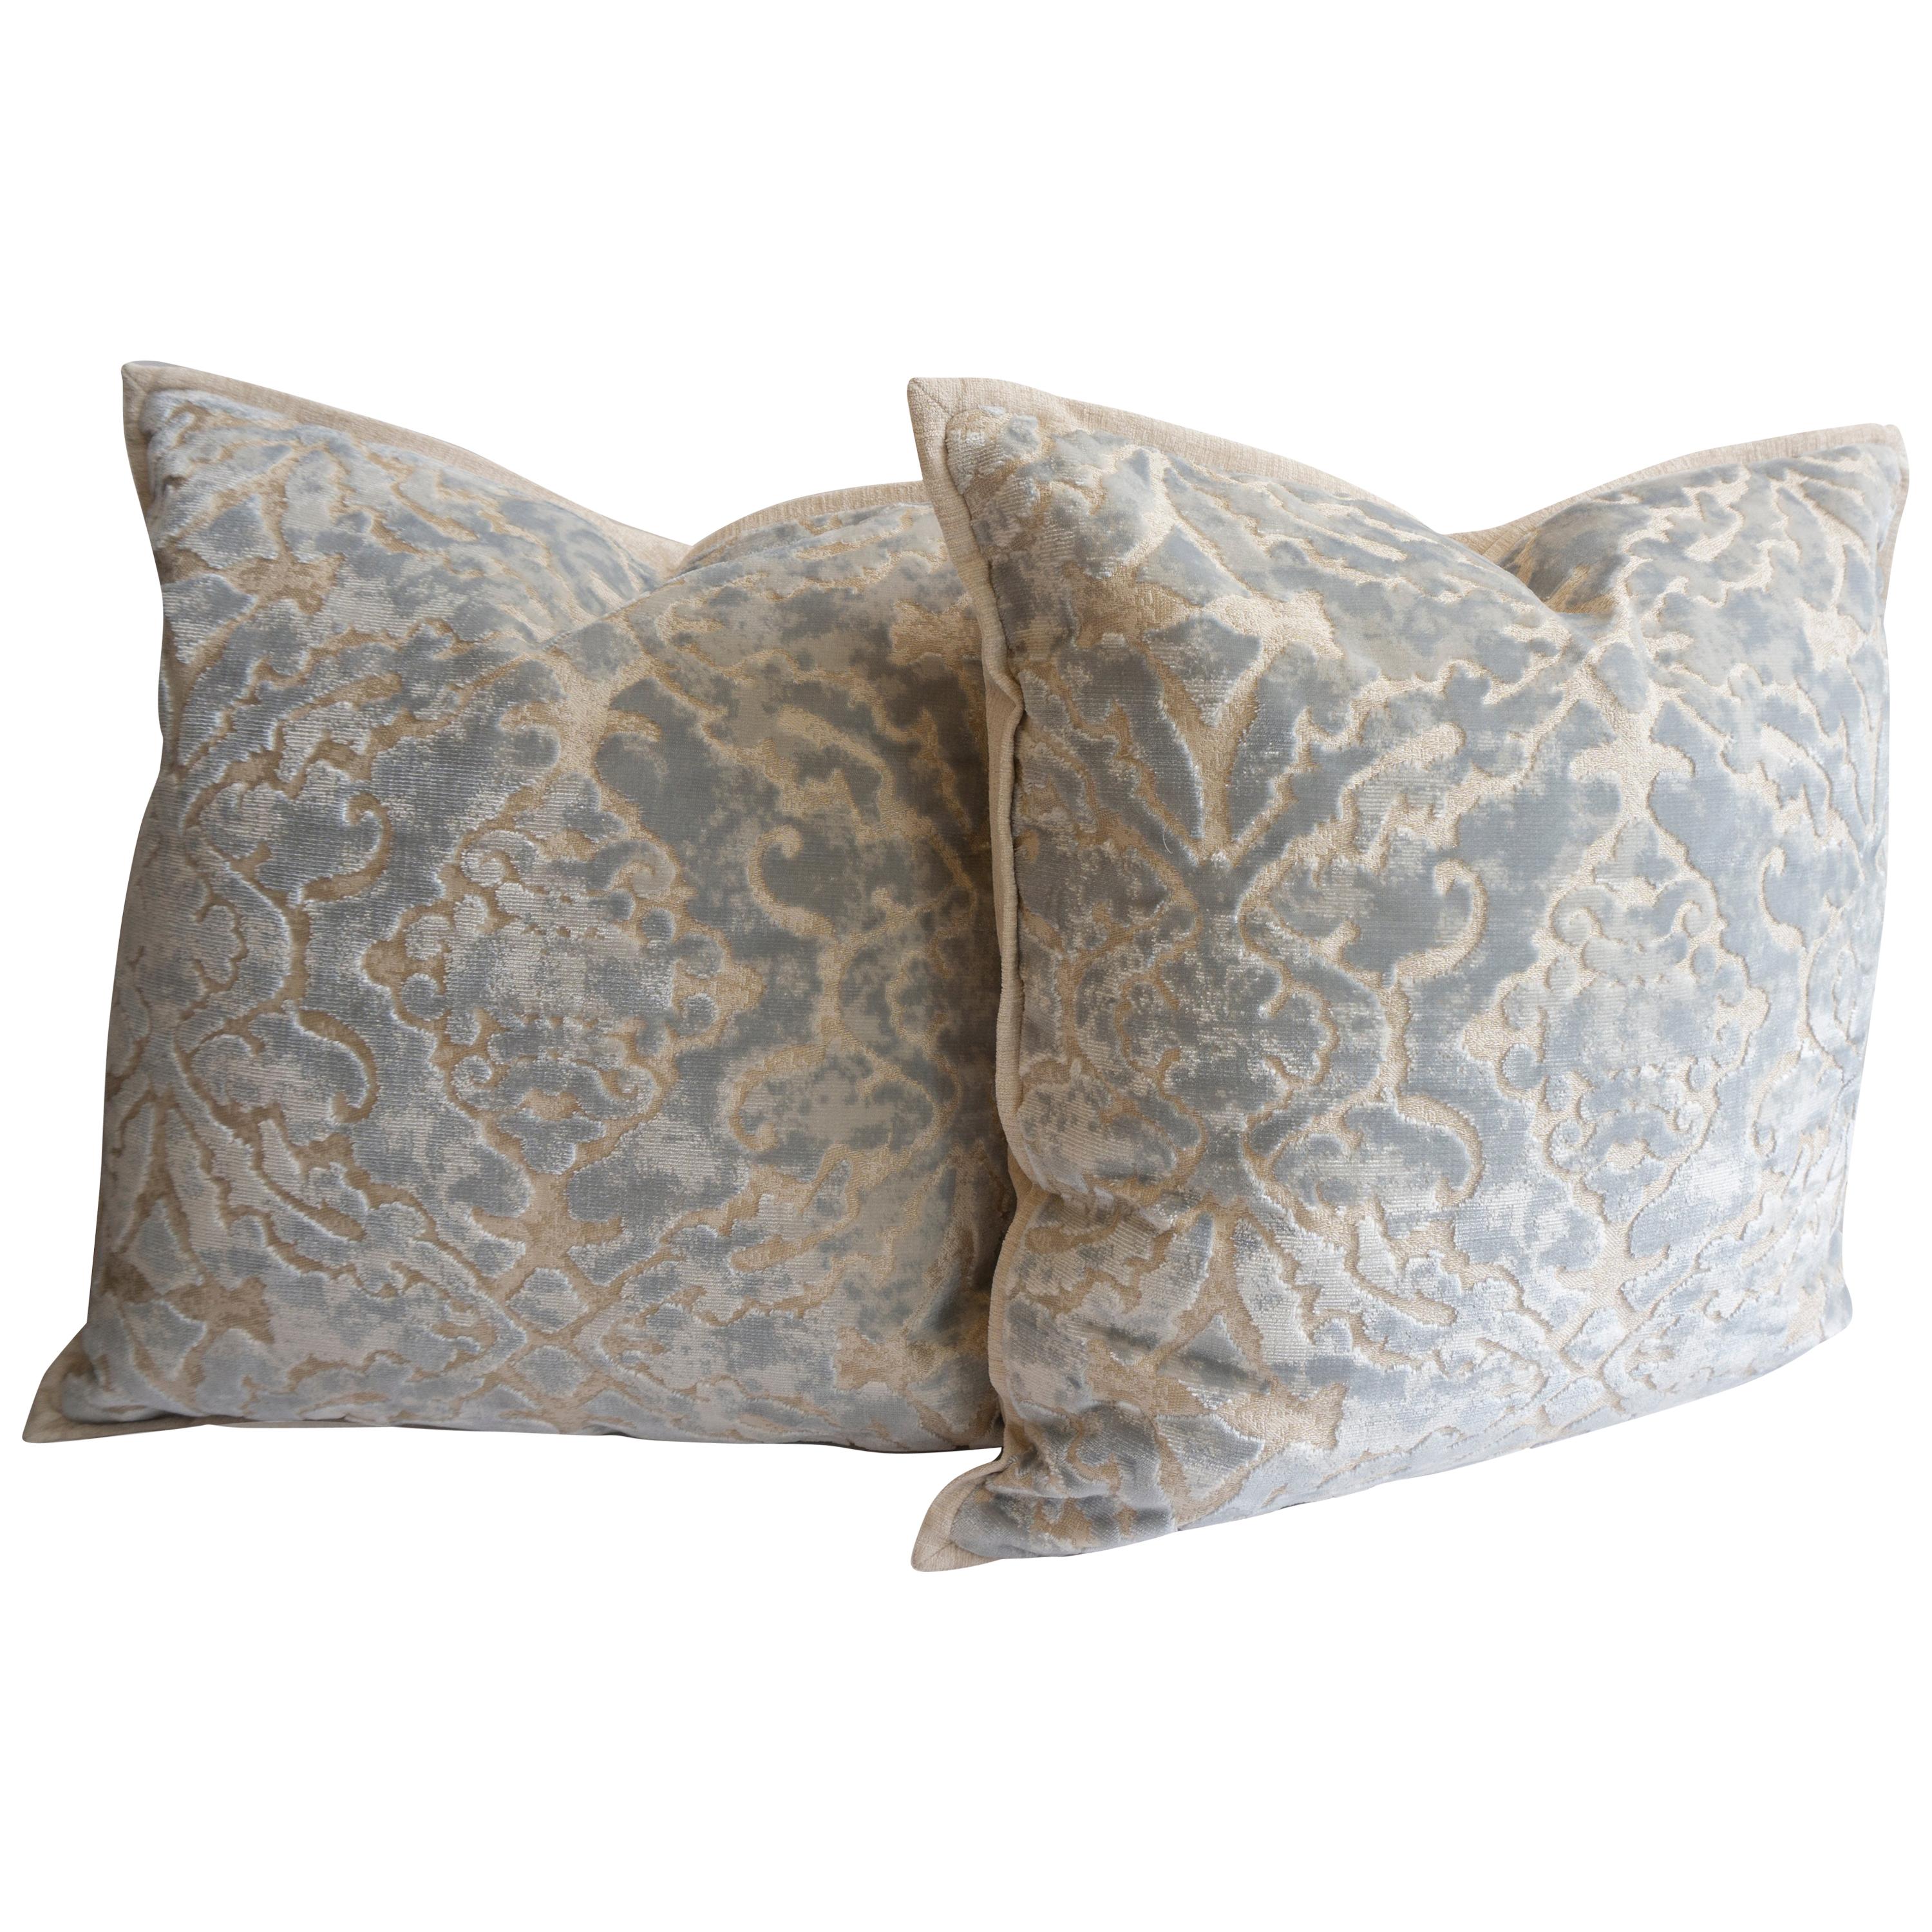 Throw Pillows in Cut Velvet Damask Pattern